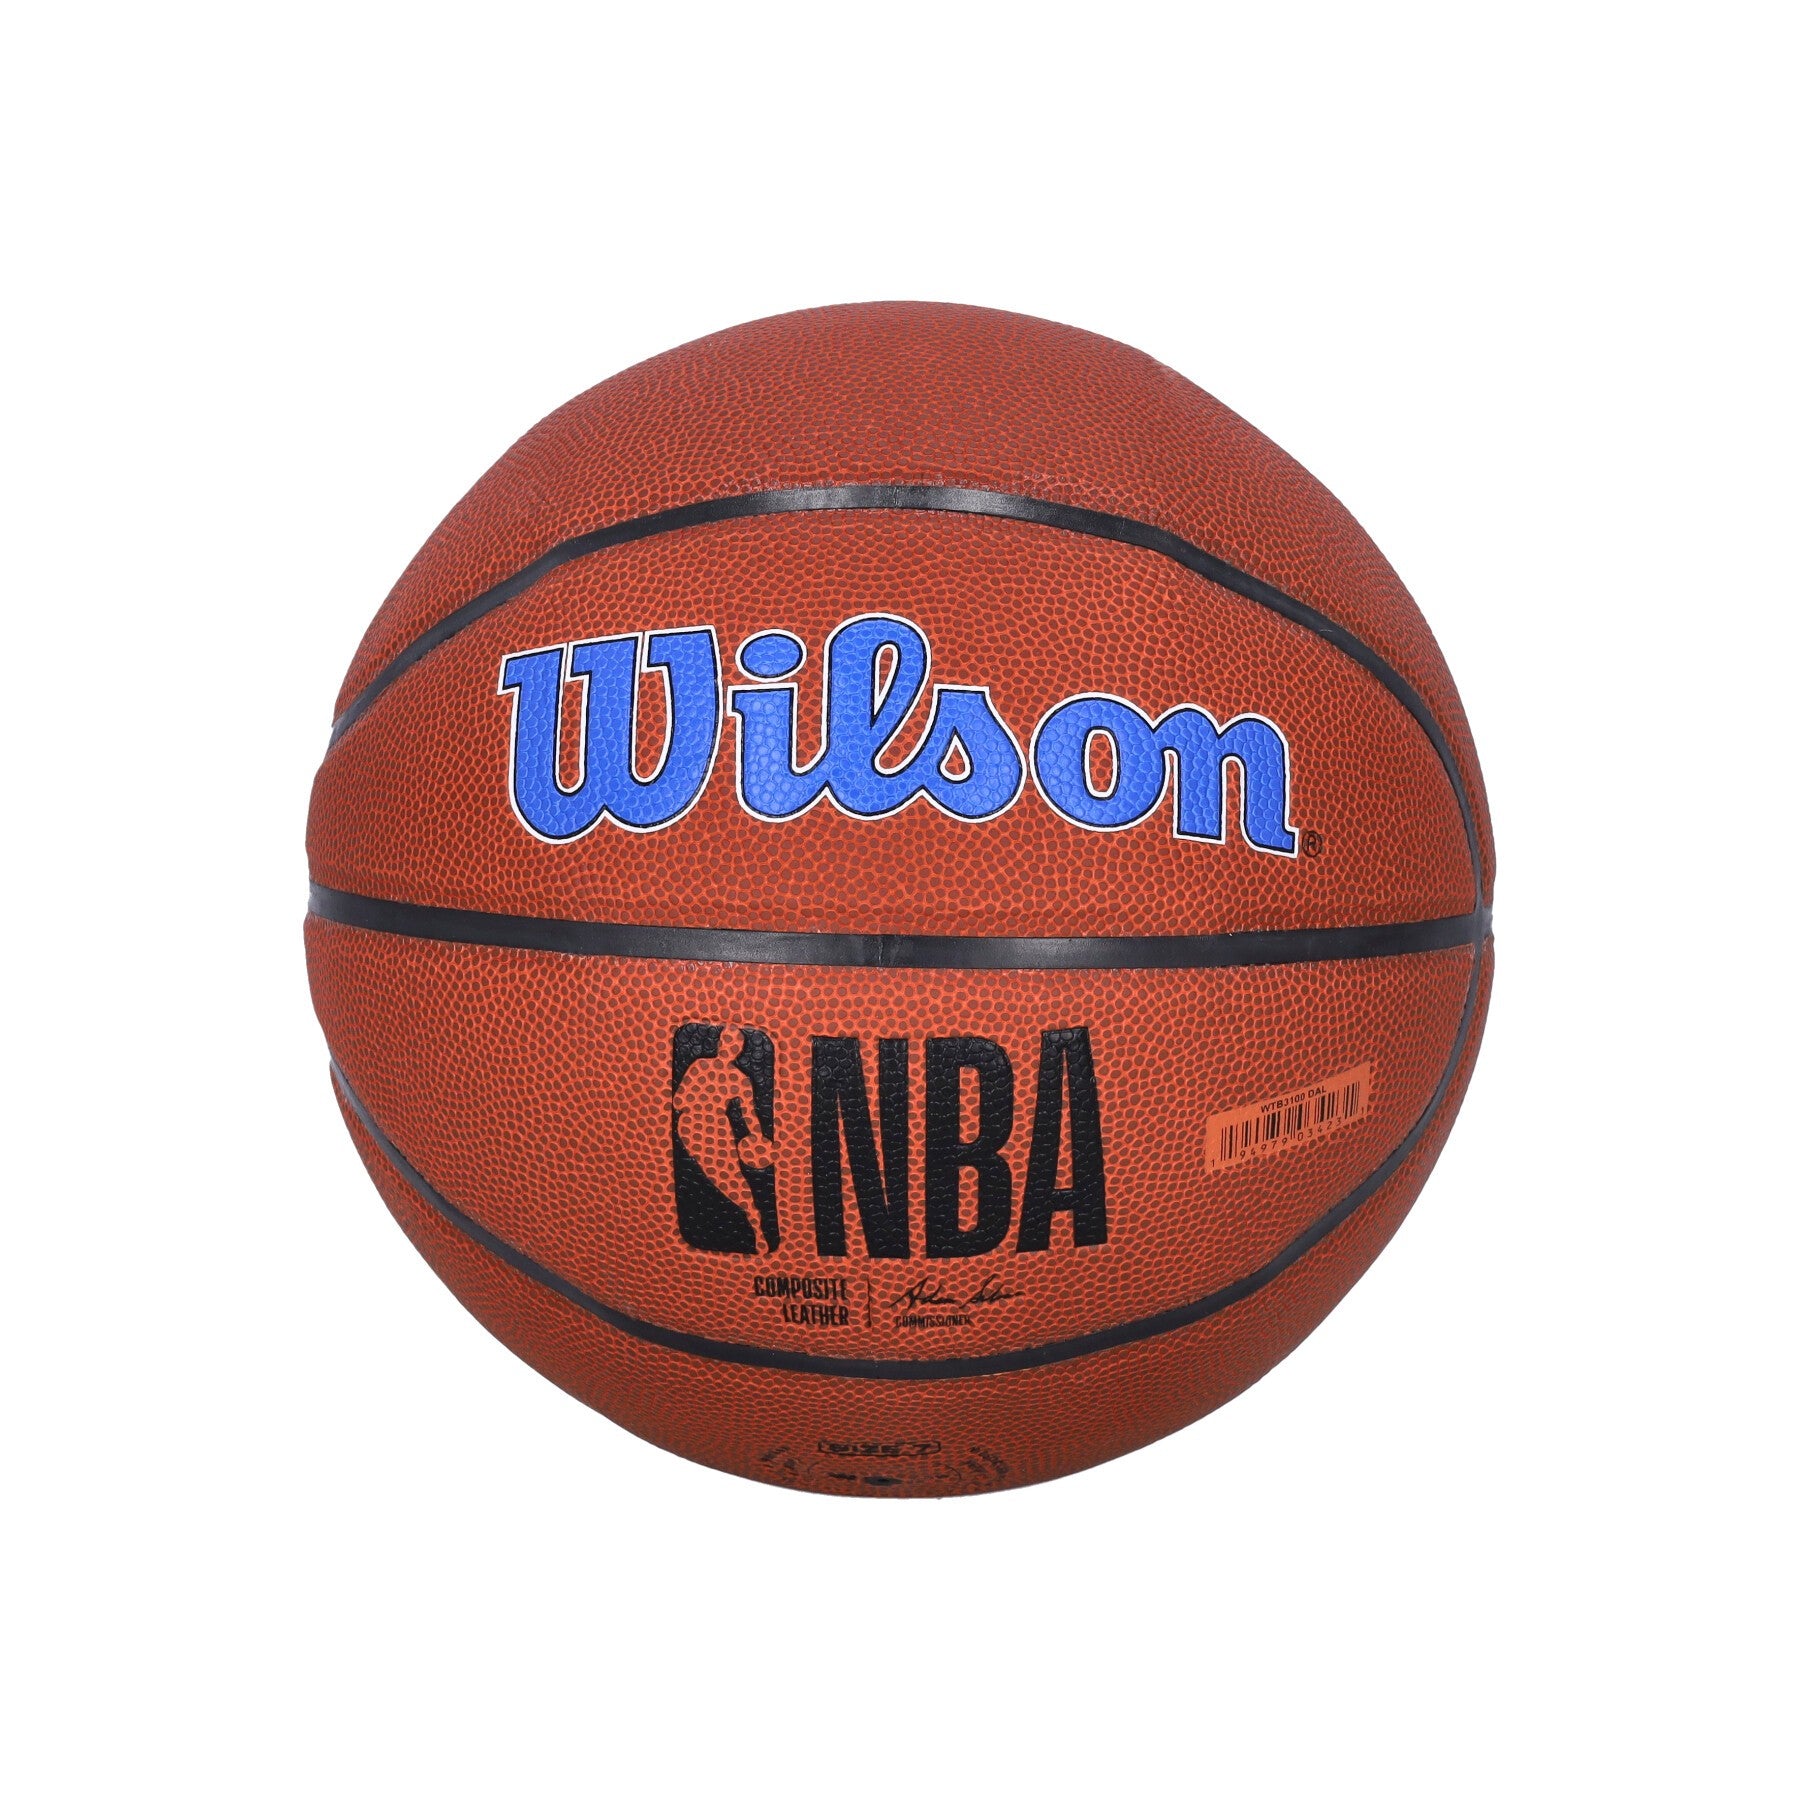 Men's NBA Team Alliance Basketball Size 7 Dalmav Original Team Colors